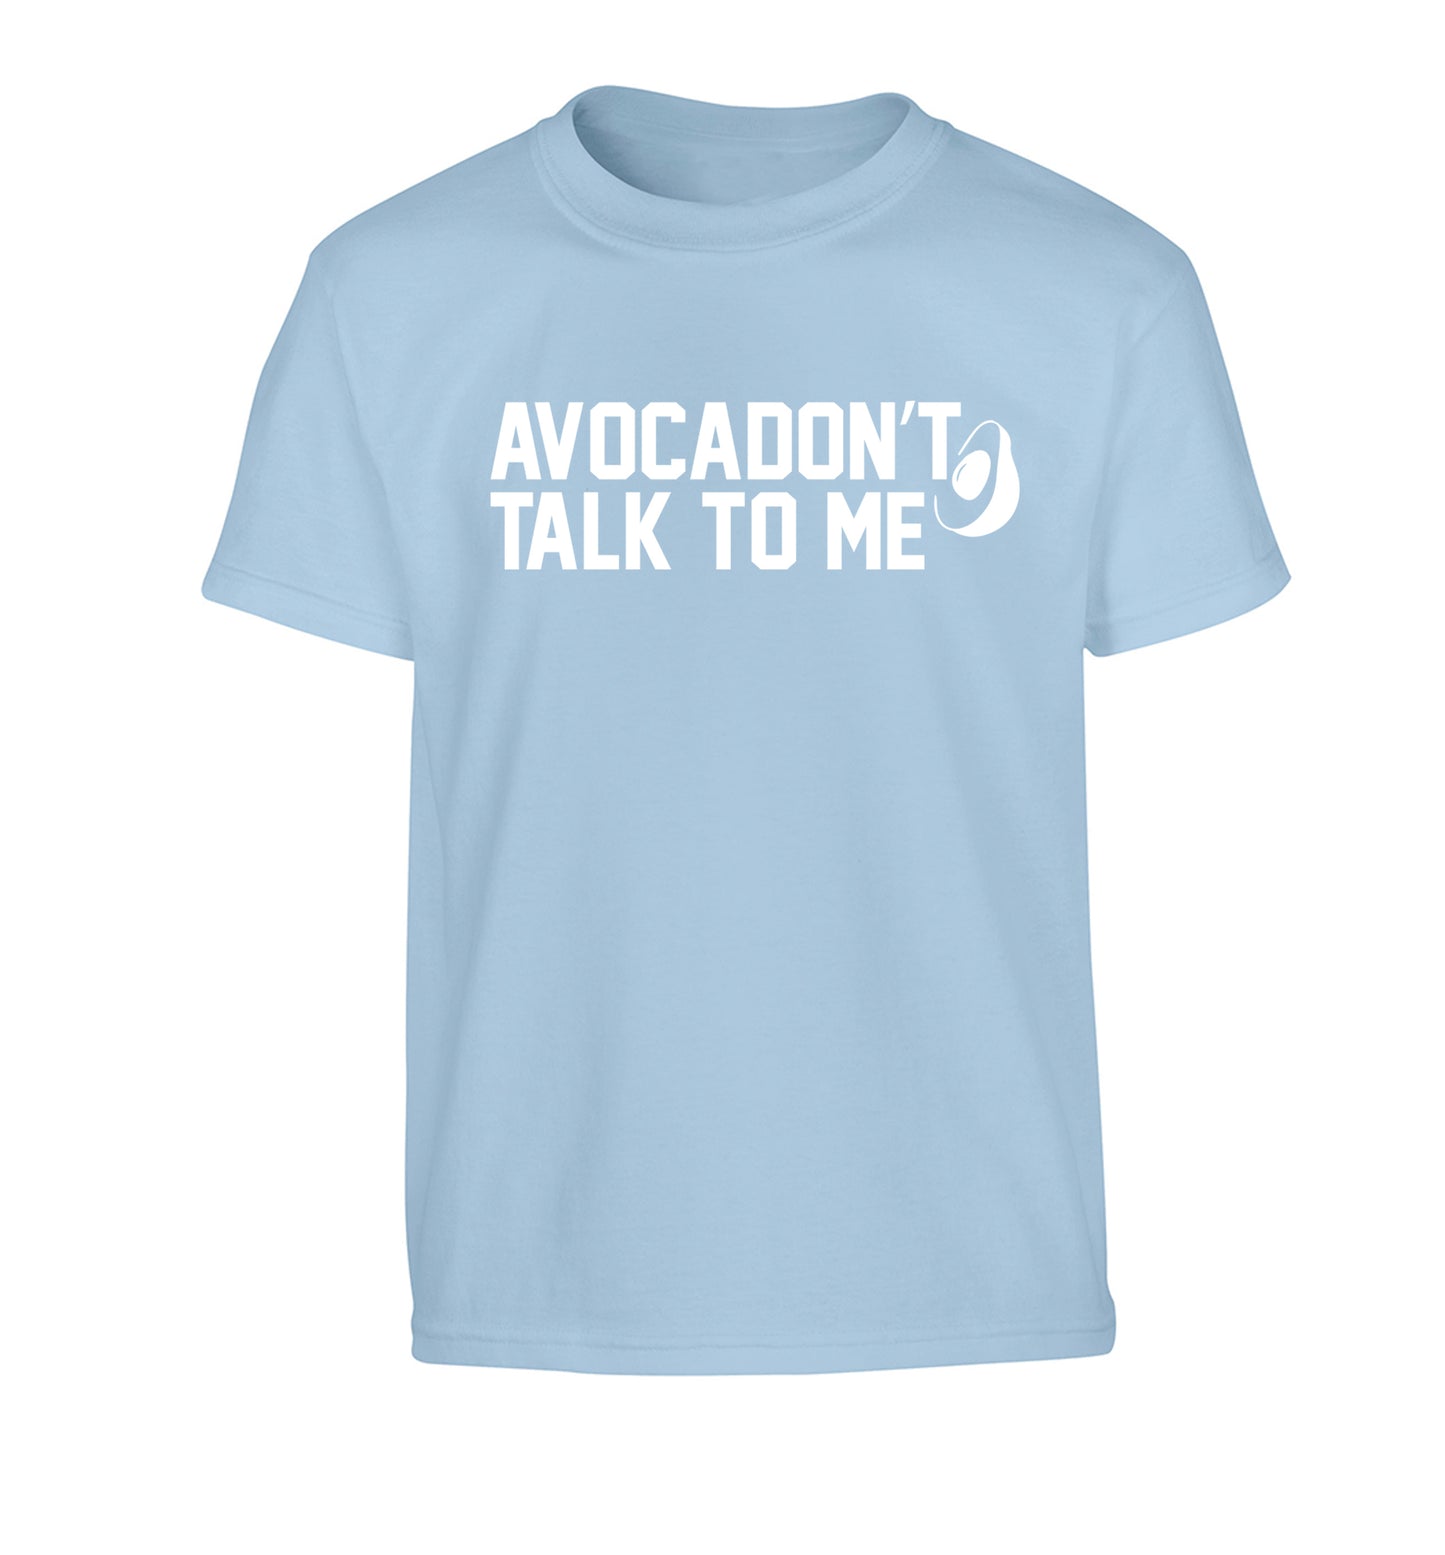 Avocadon't talk to me Children's light blue Tshirt 12-14 Years